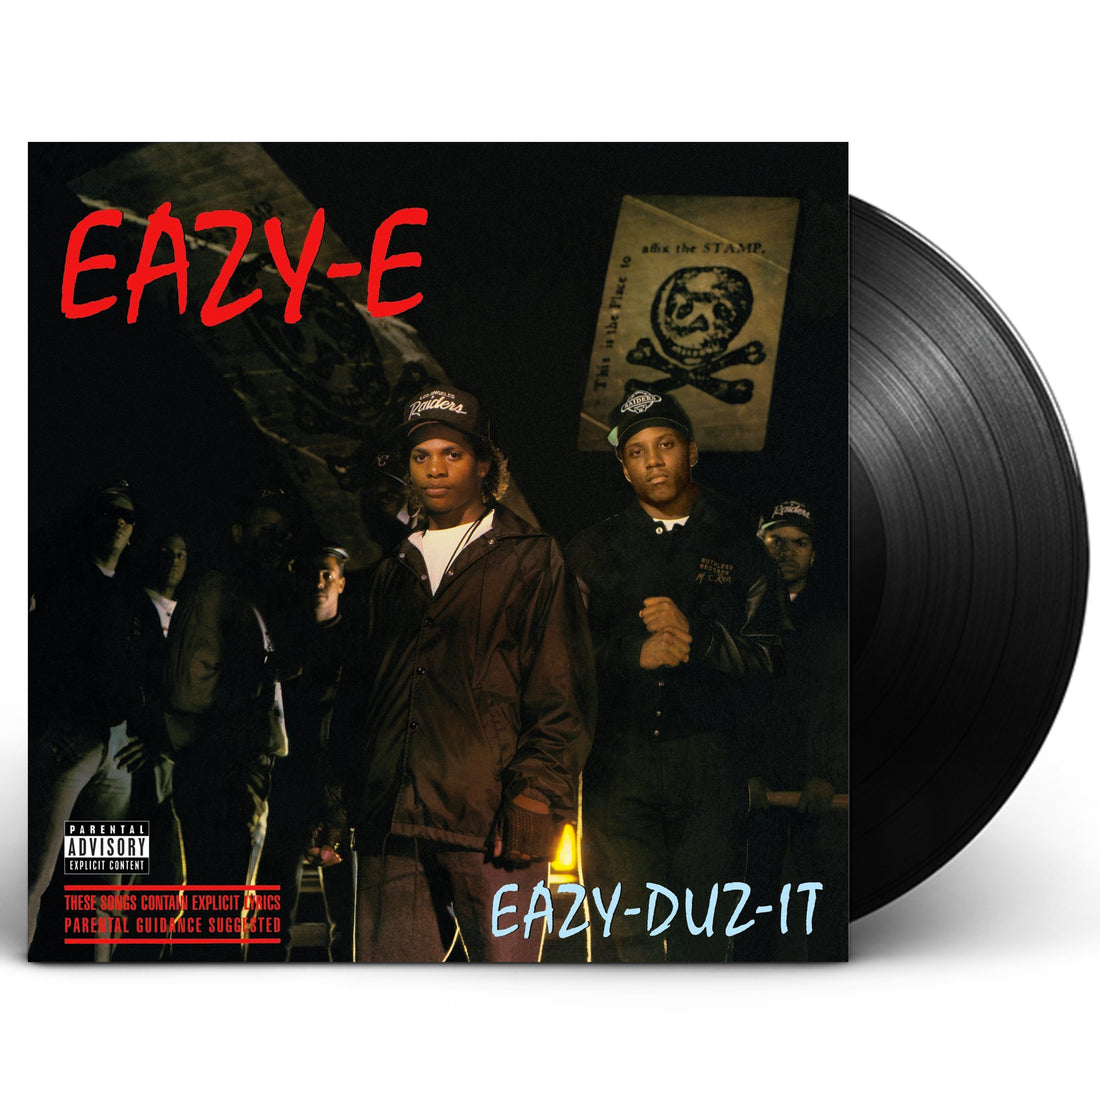 Eazy-E "Eazy Duz It" LP Vinyl